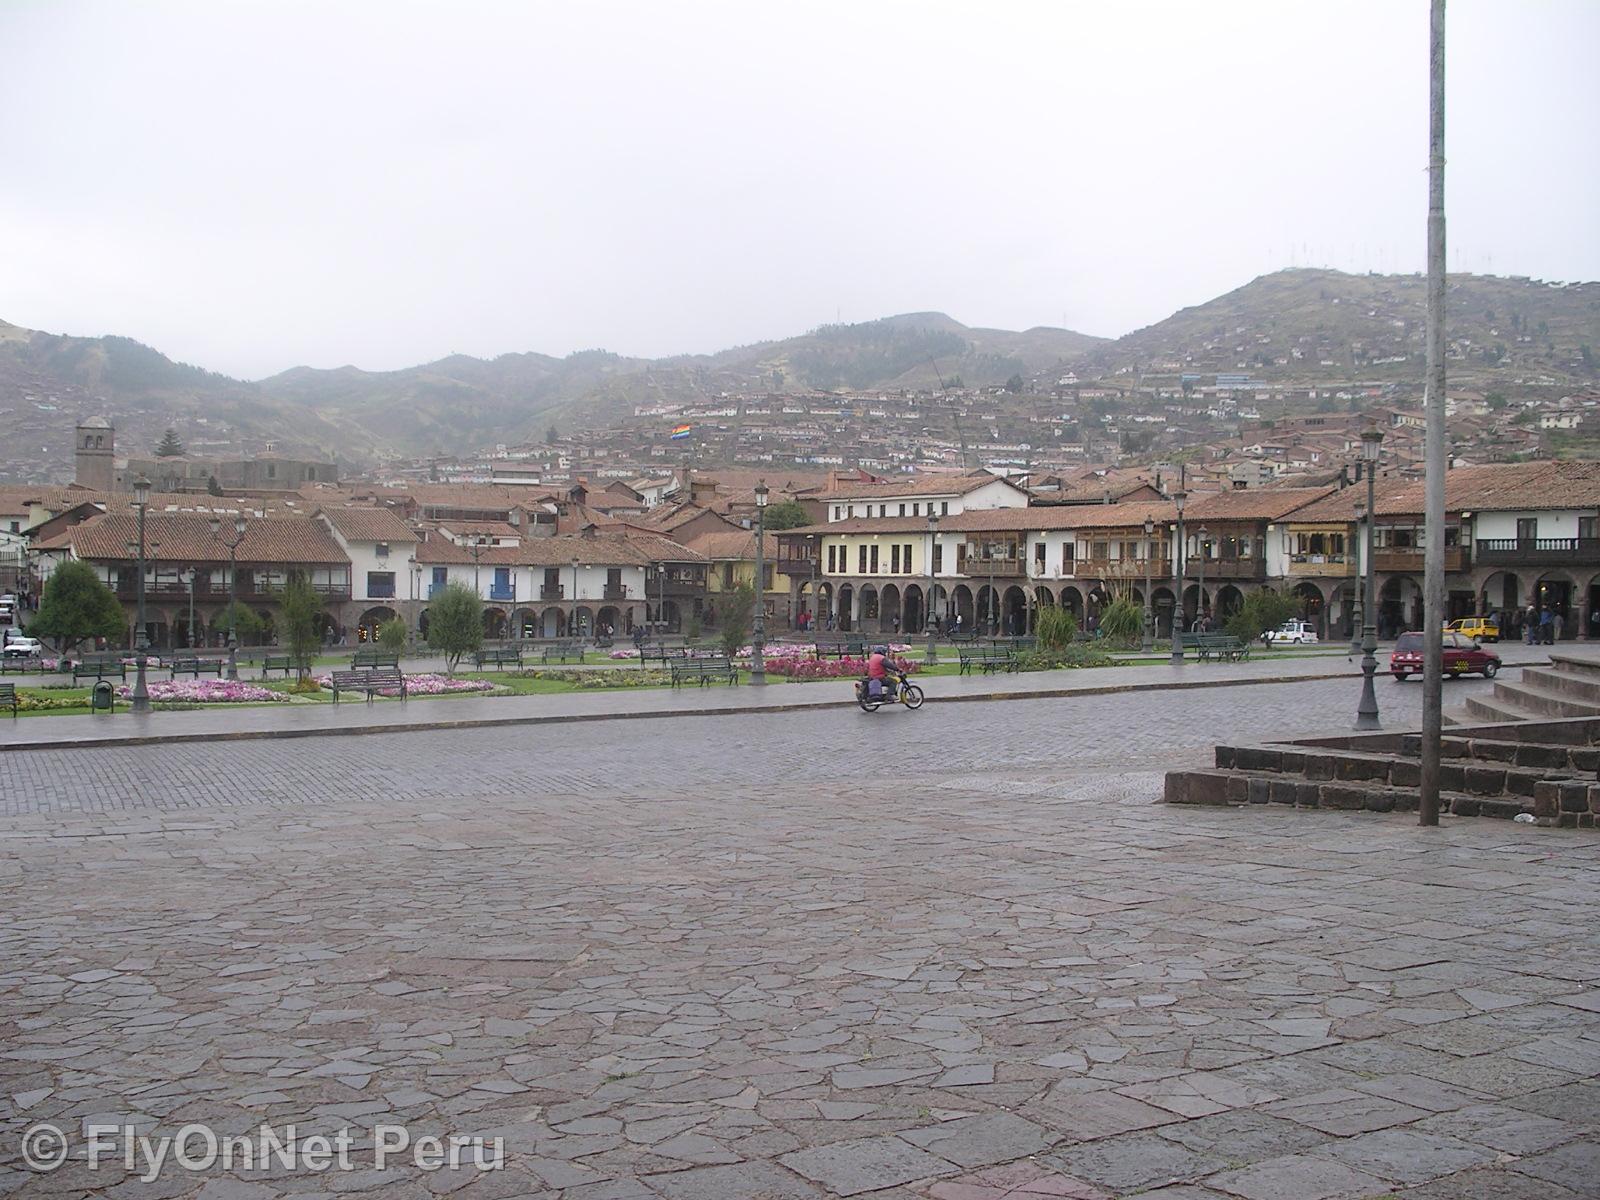 Álbum de fotos: Main Place of Cusco, Cuzco